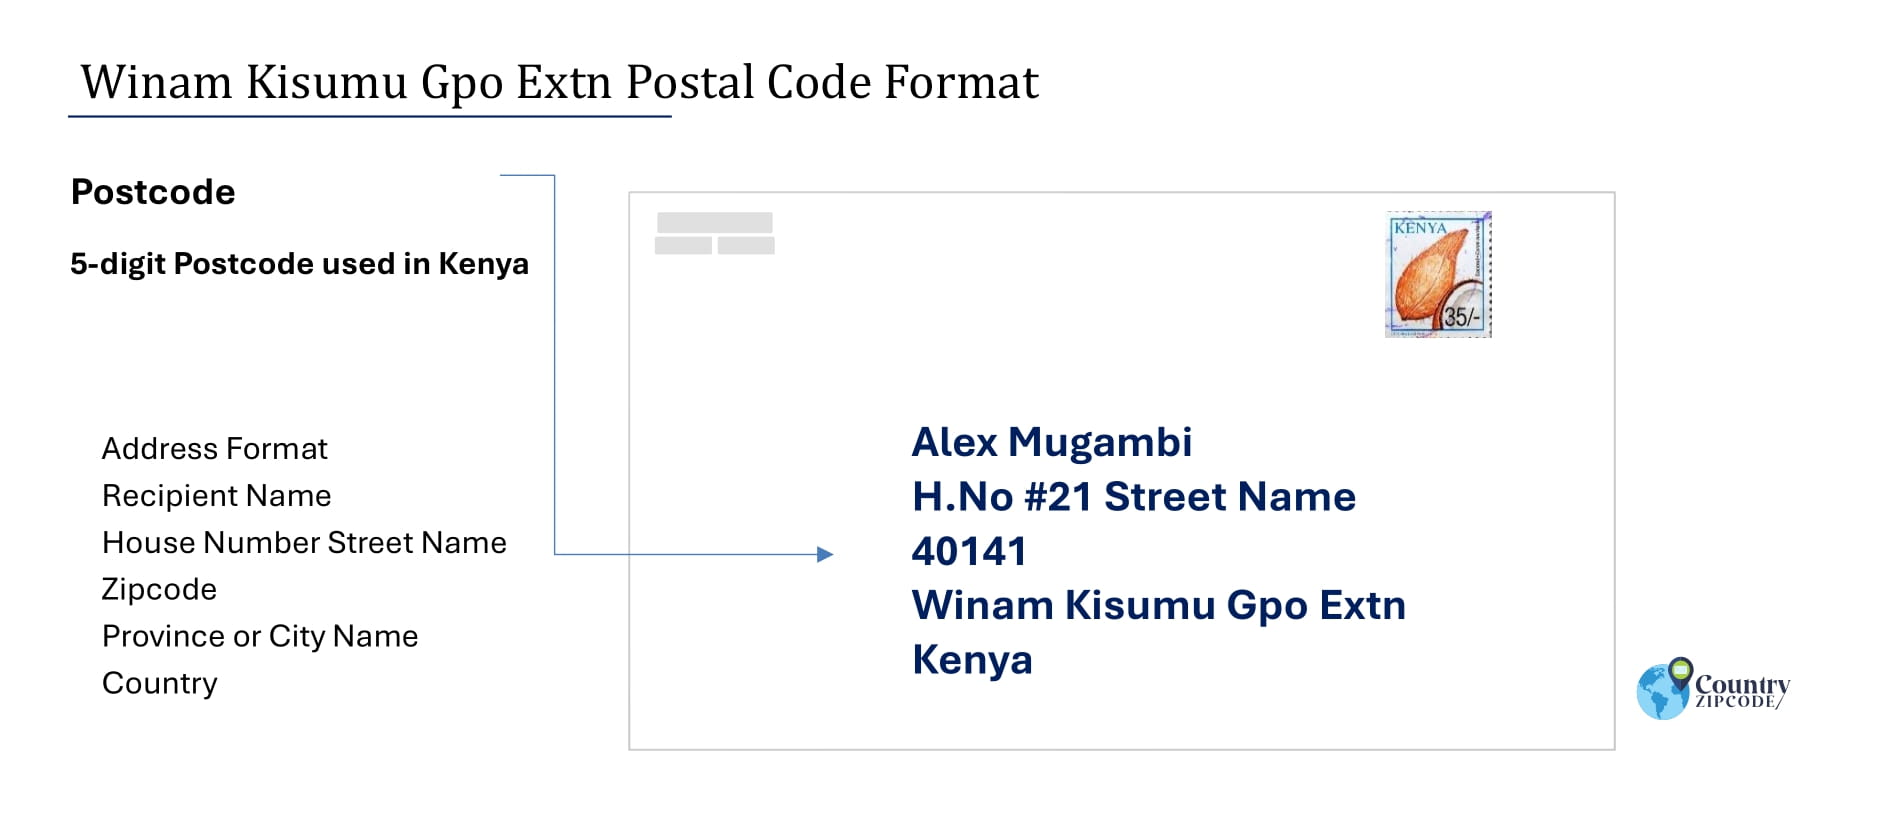 Example of Winam Kisumu Gpo Extn Address and postal code format